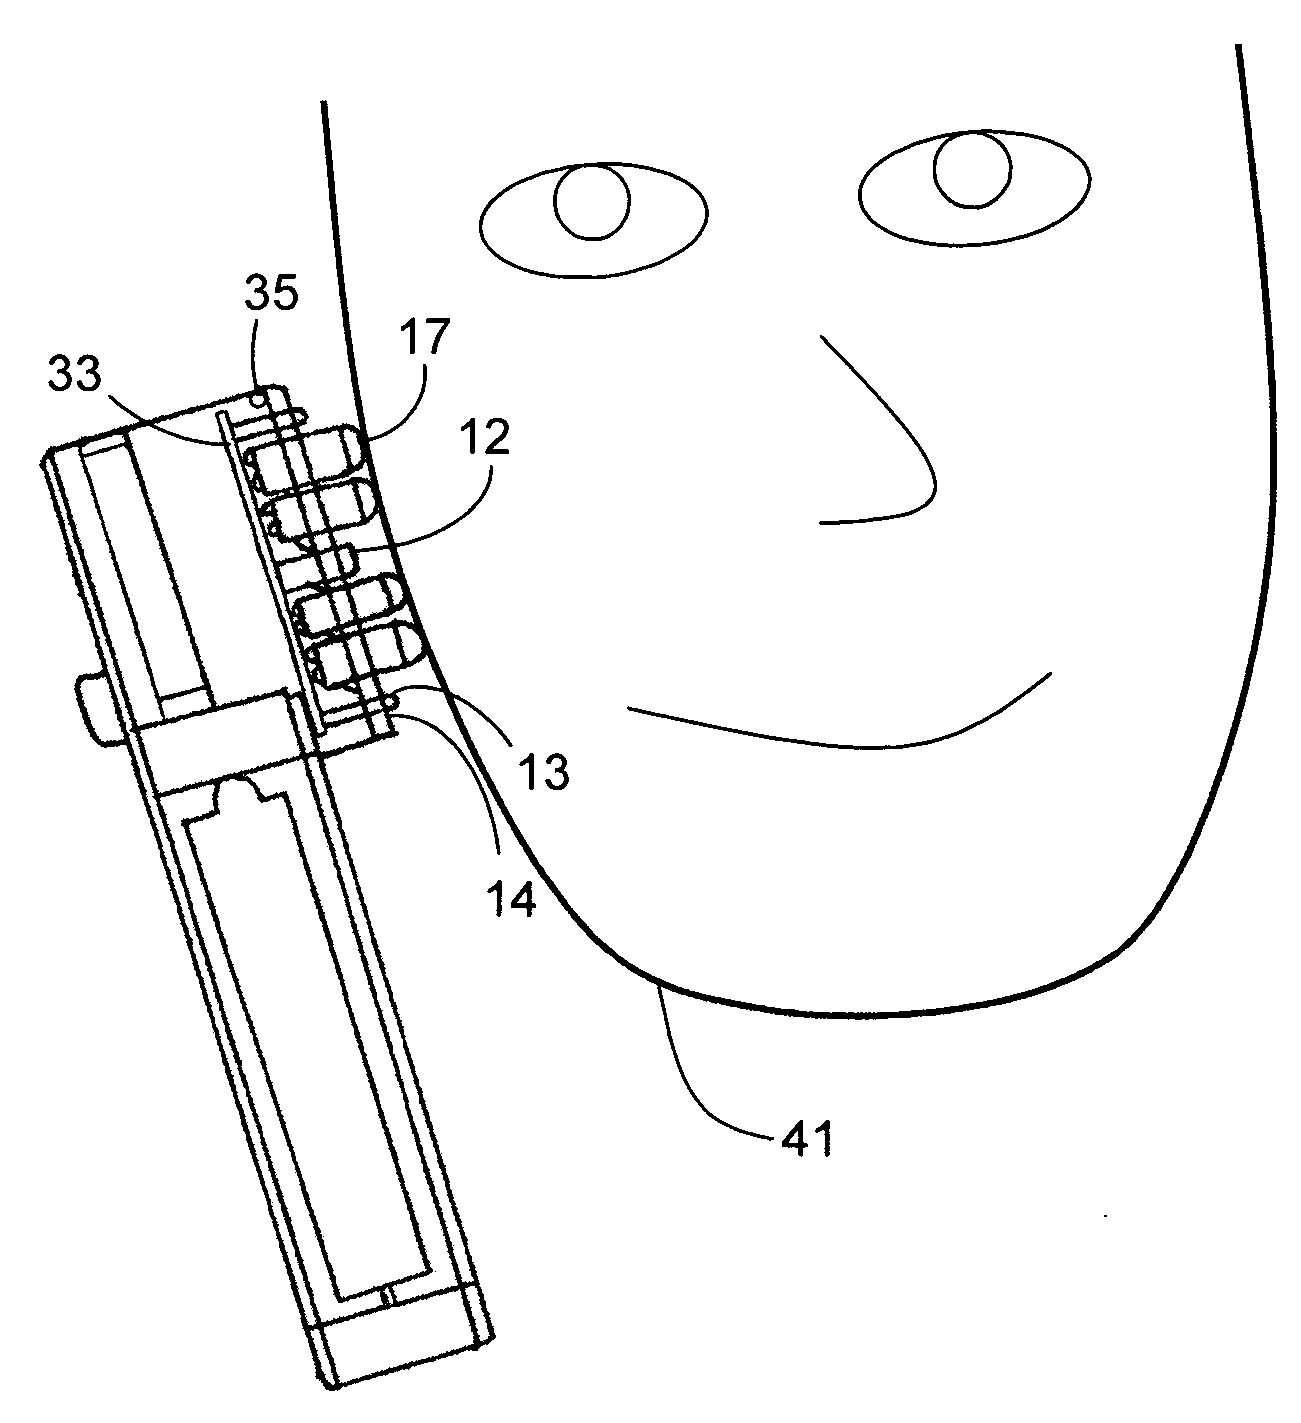 Acne treatment device